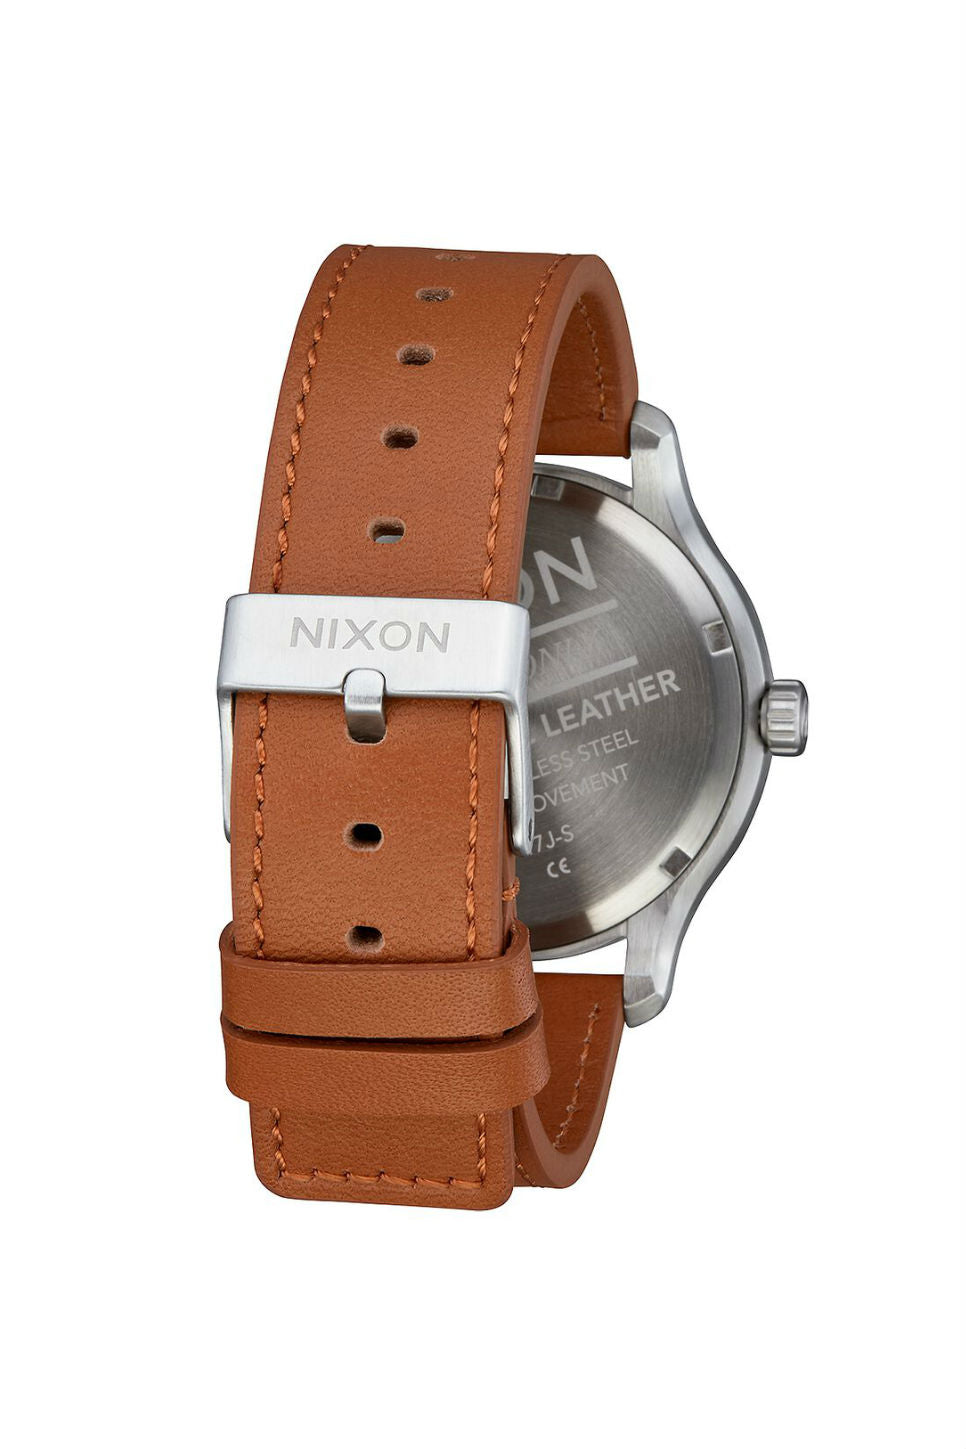 Nixon - Patrol Leather Watch - Navy/Saddle - Back